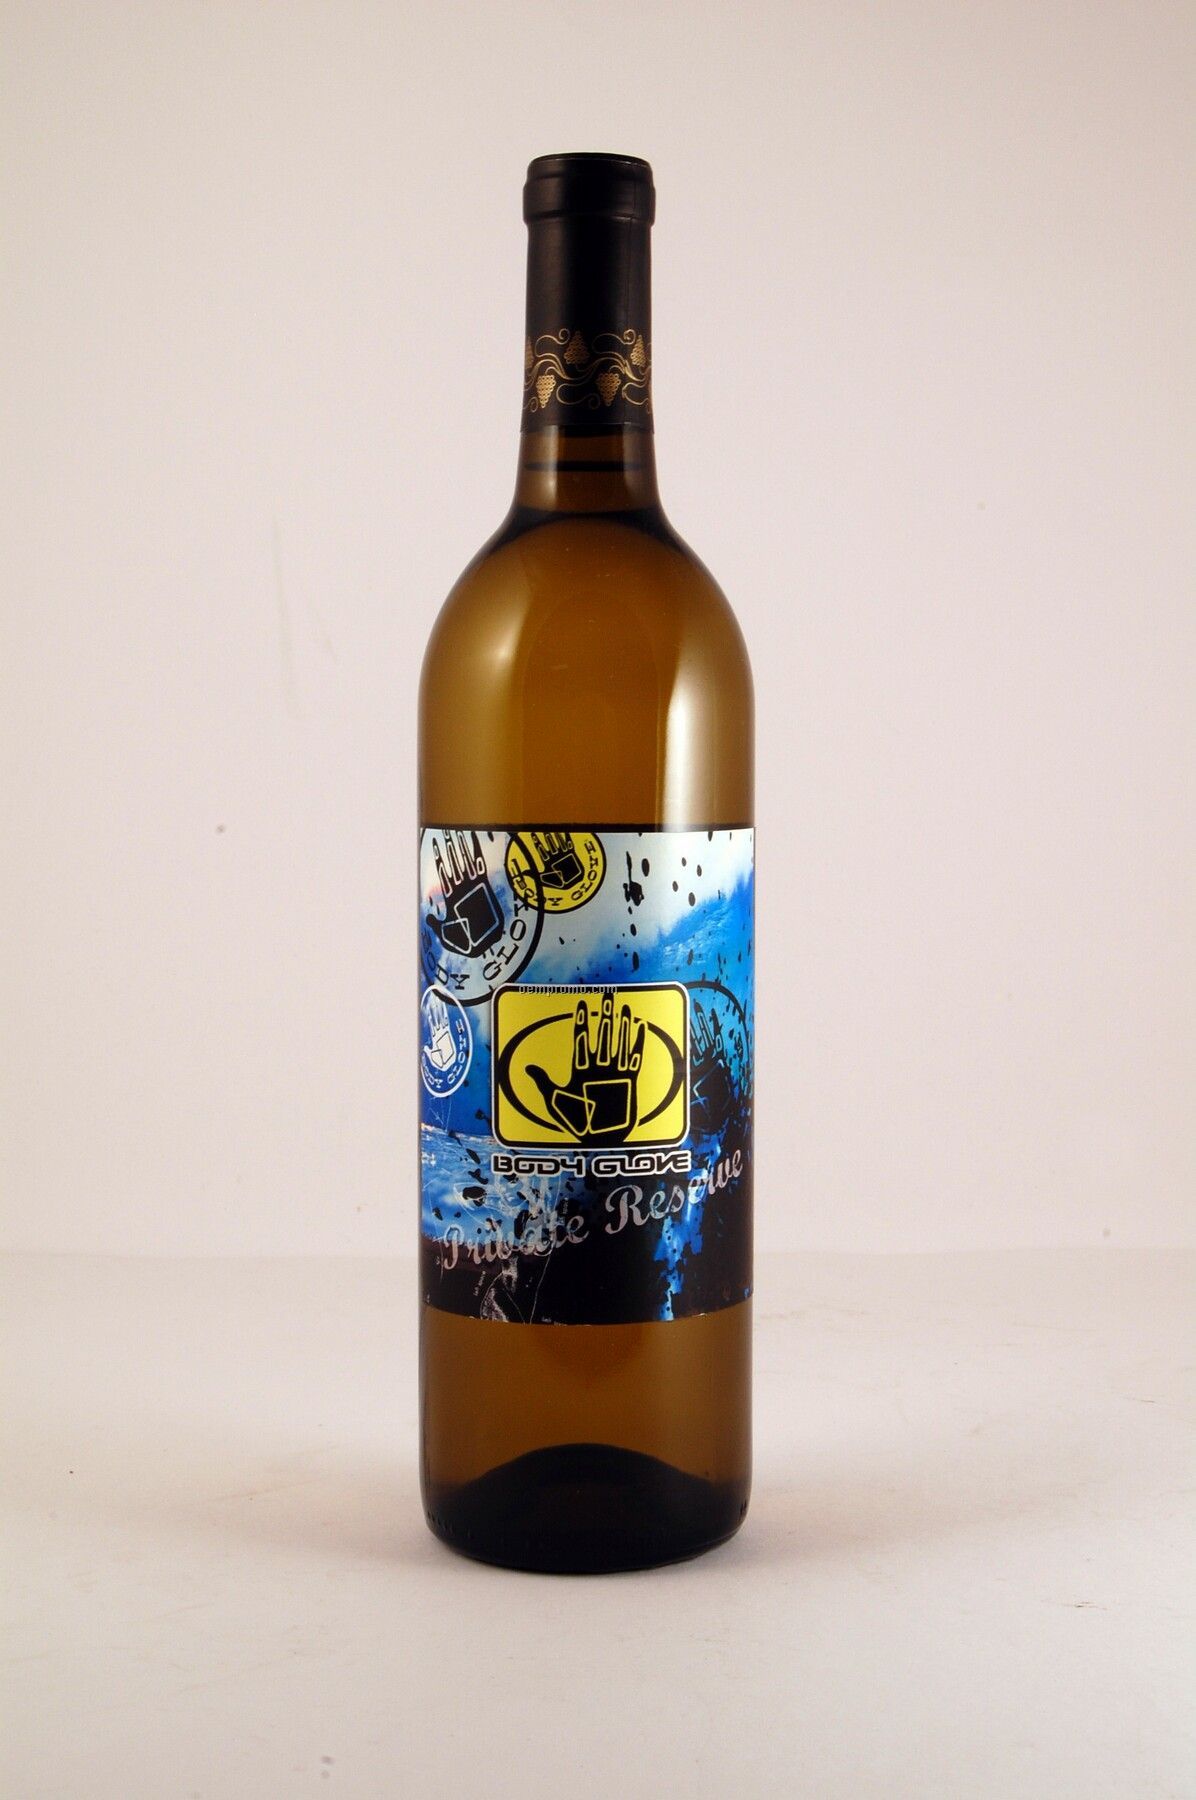 2008 Wv Chardonnay, Mendocino County Wine (Custom Labeled Wine)